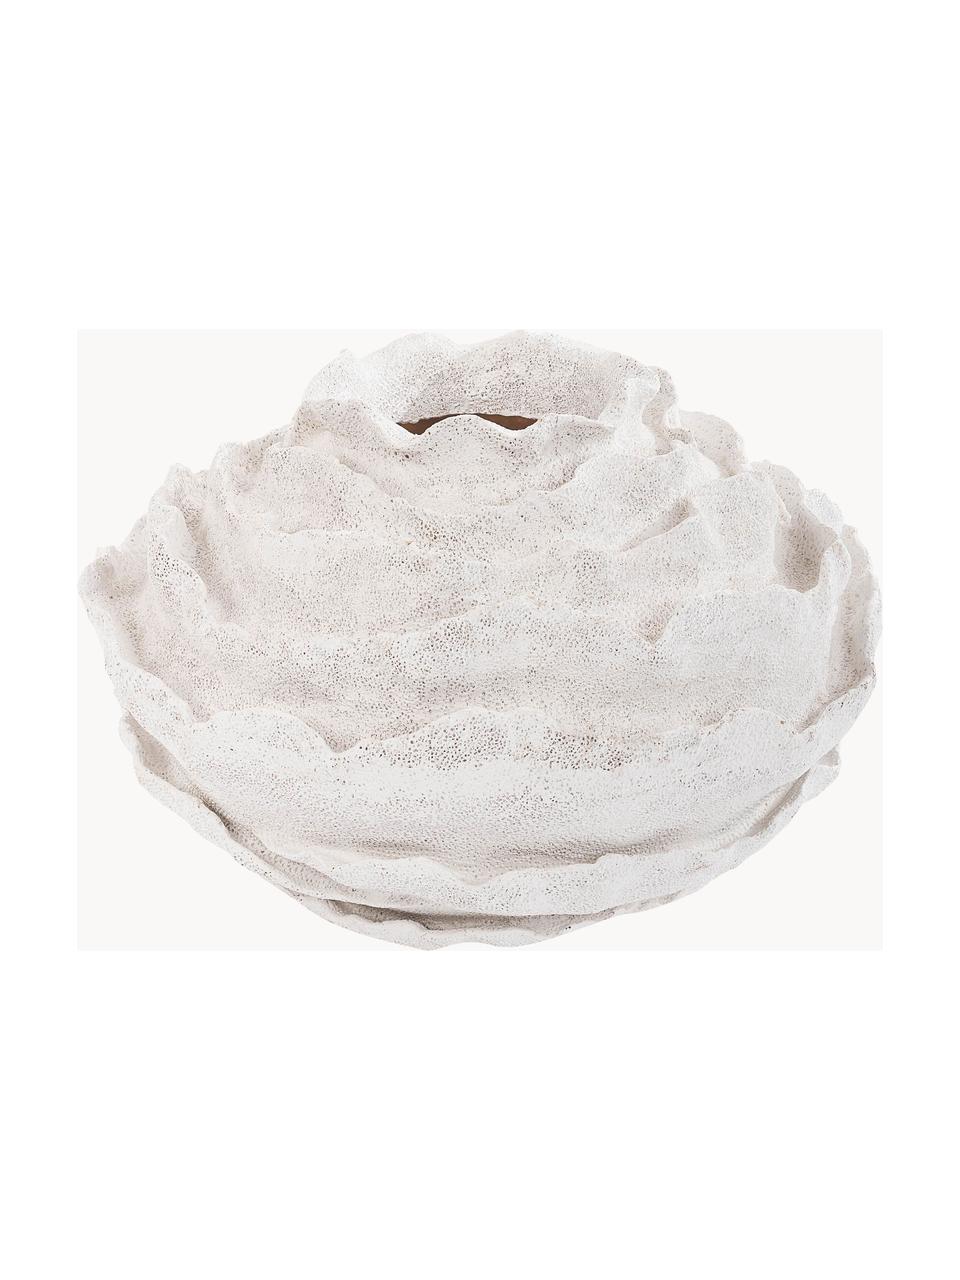 Große Design-Vase Pavo, H 40 cm, Polyresin, Off White mit Sand-Finish, Ø 58 x H 40 cm